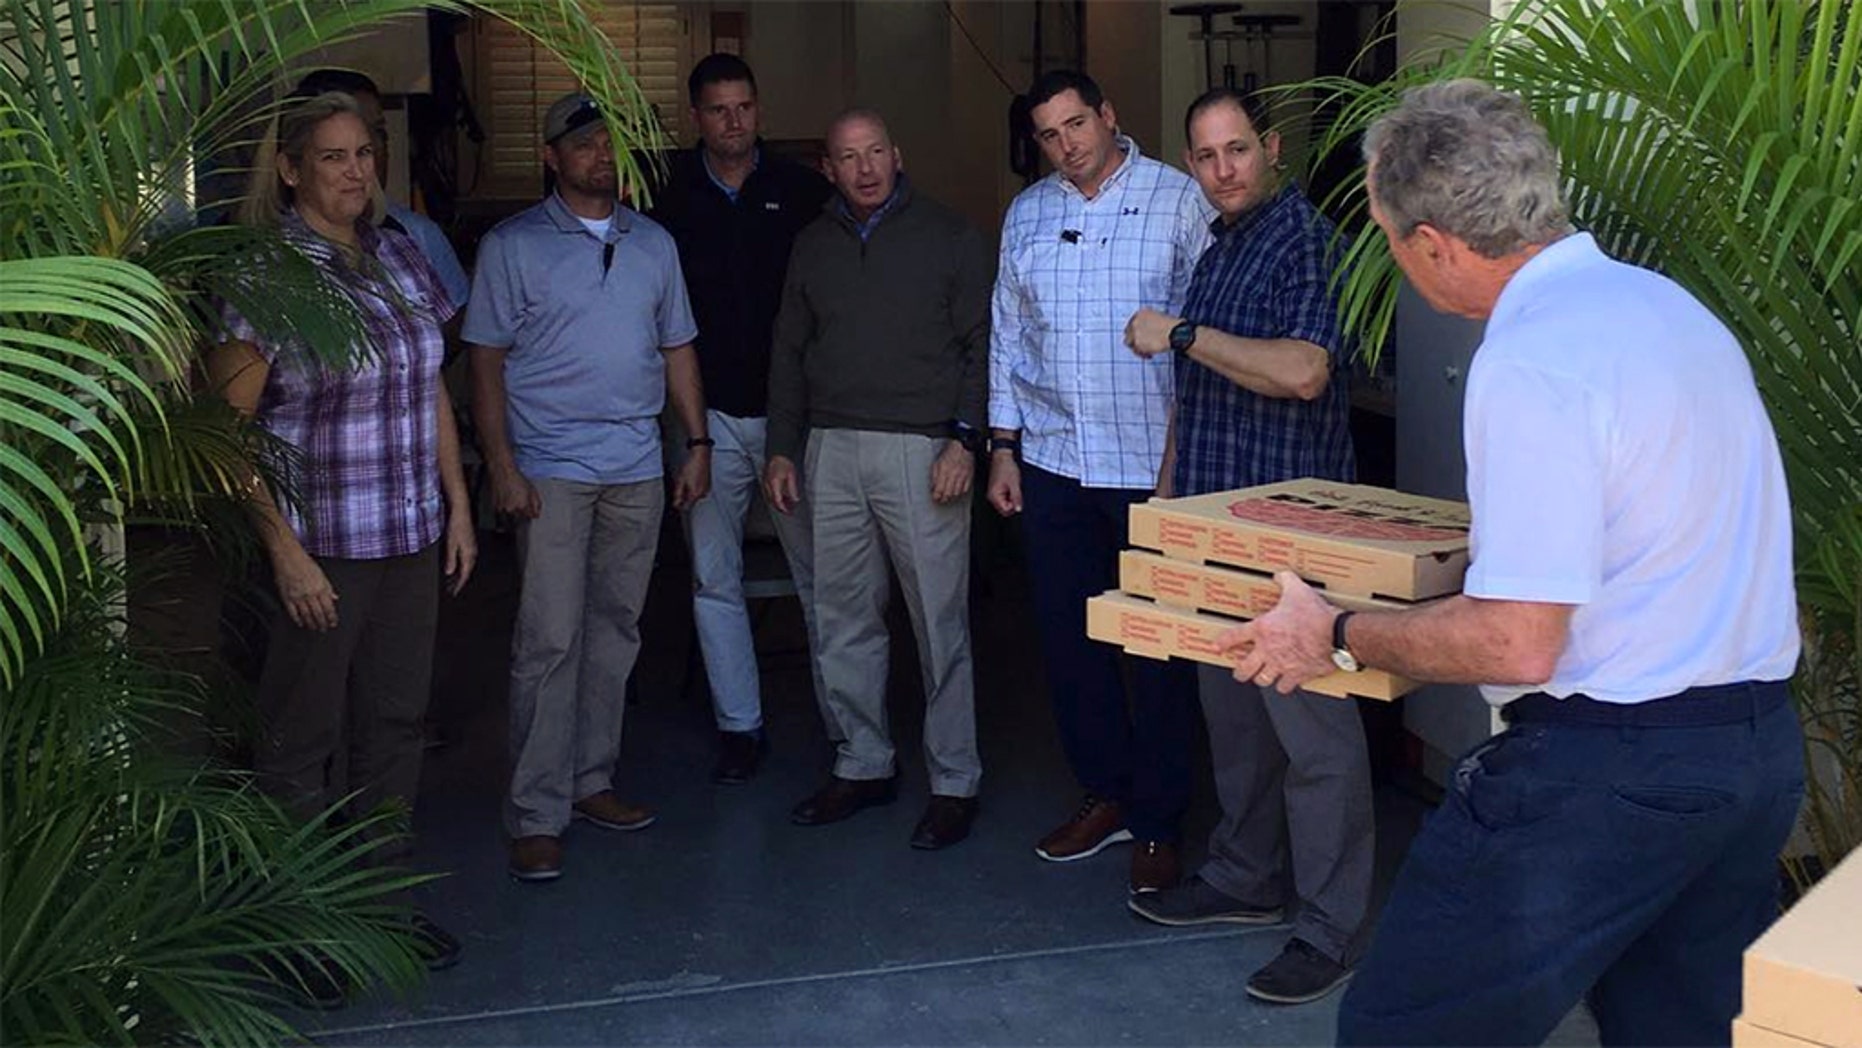 George W. Bush delivers pizza to secret service detail amid government shutdown